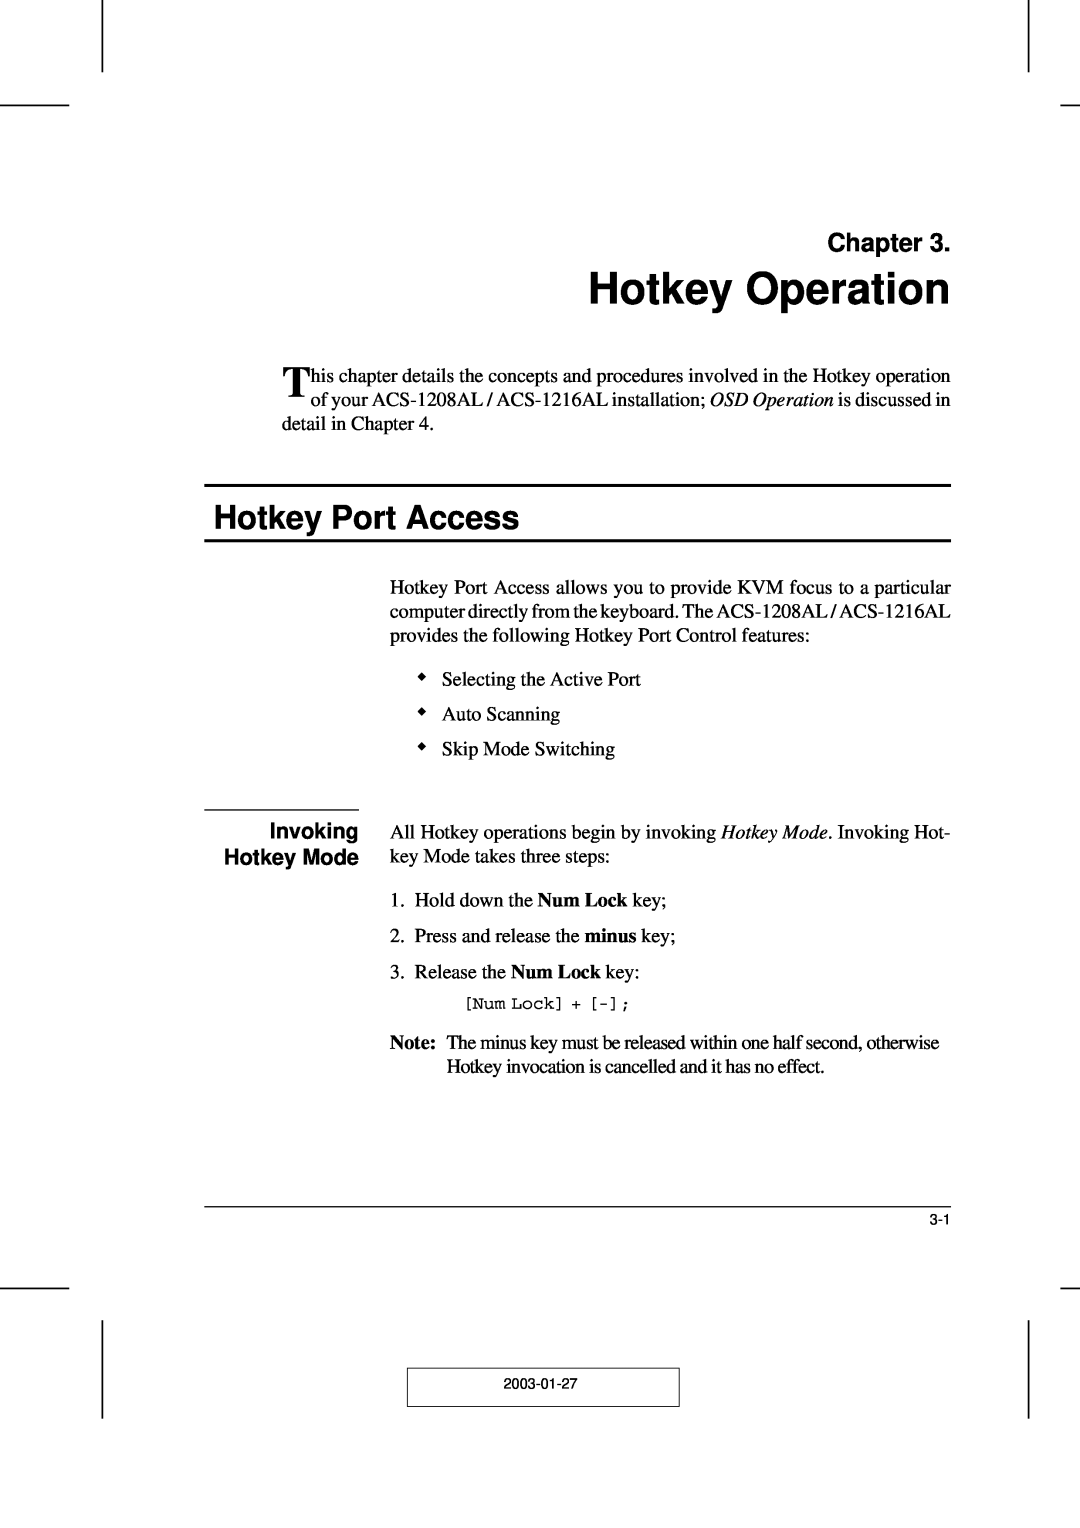 ATEN Technology ACS-1208AL, ACS-1216AL user manual Hotkey Operation, Hotkey Port Access, Invoking Hotkey Mode, Chapter 